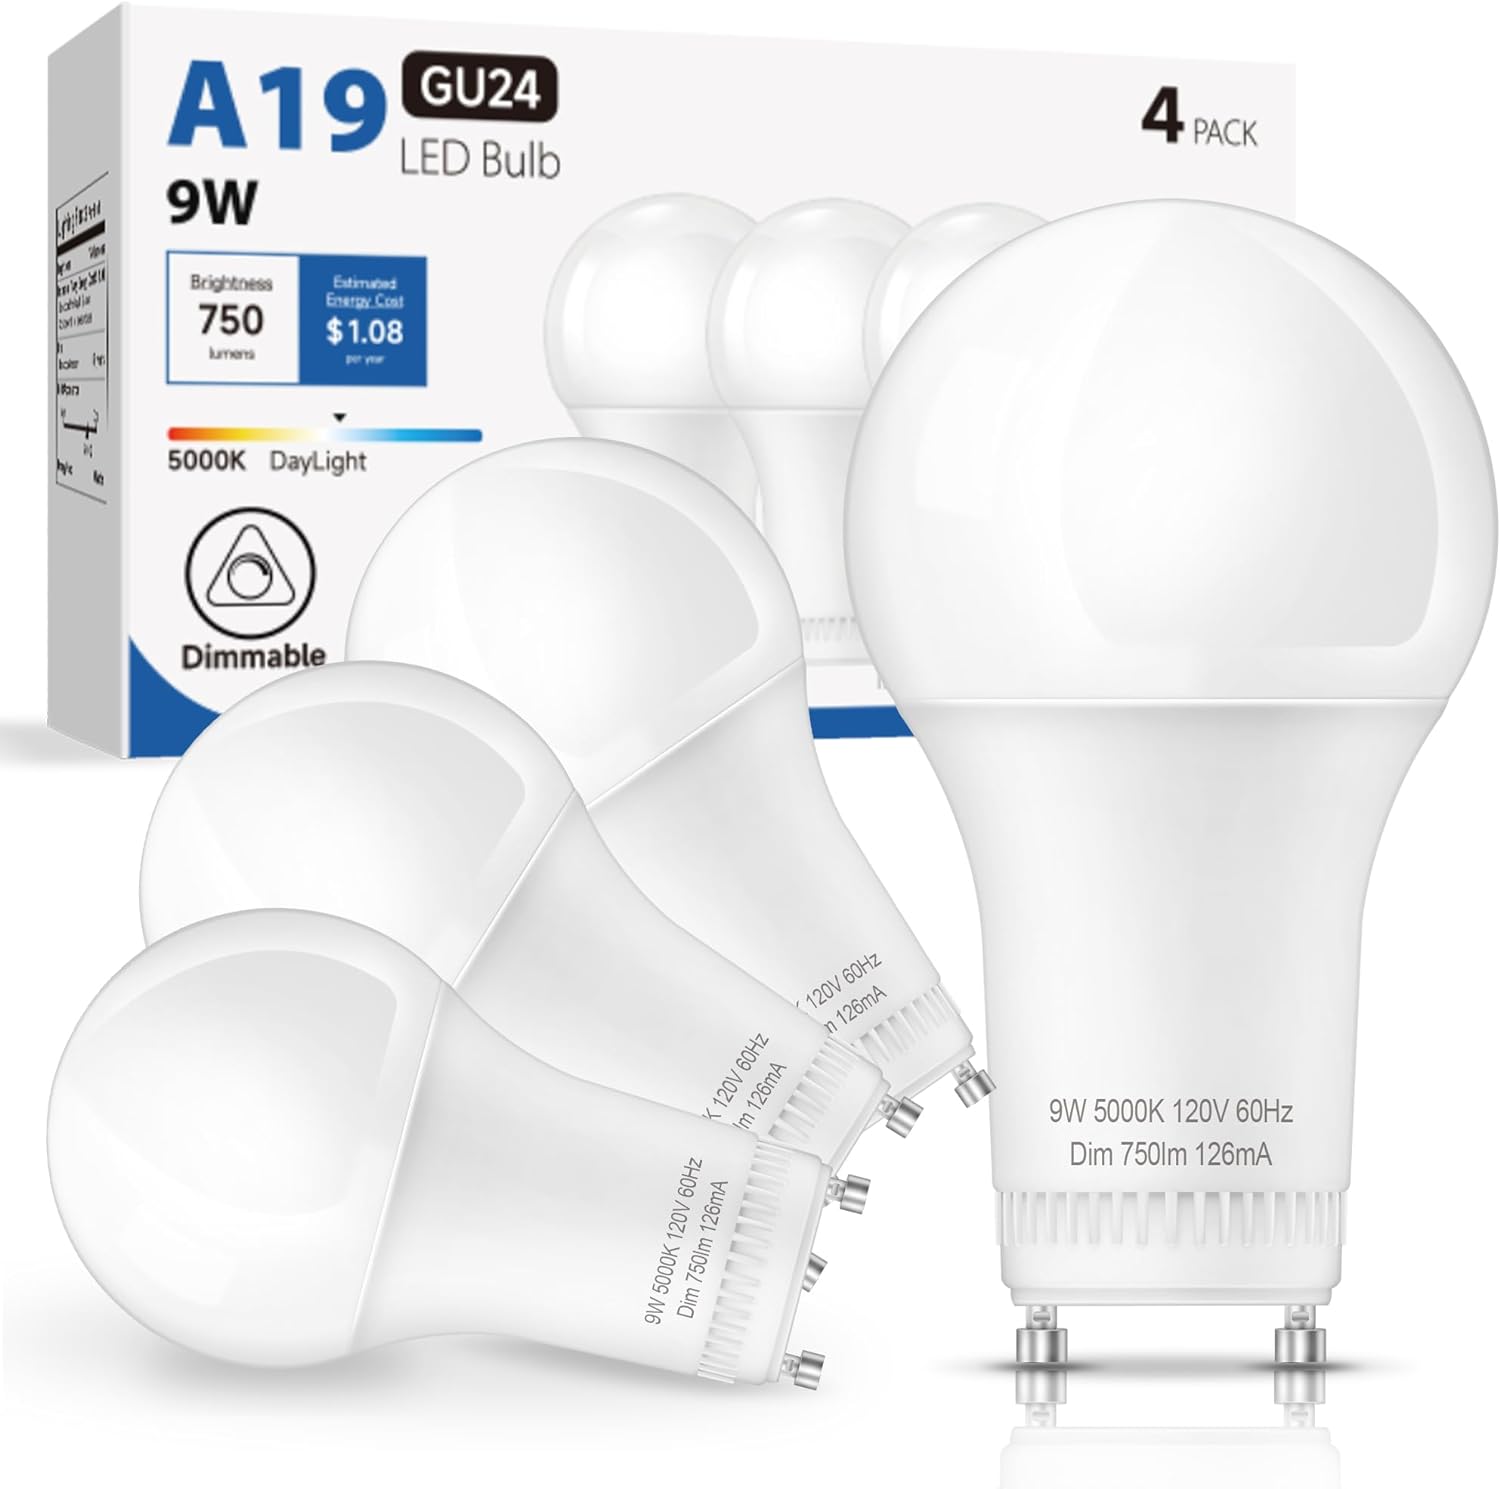 UNILAMP GU24 LED Light Bulb Review